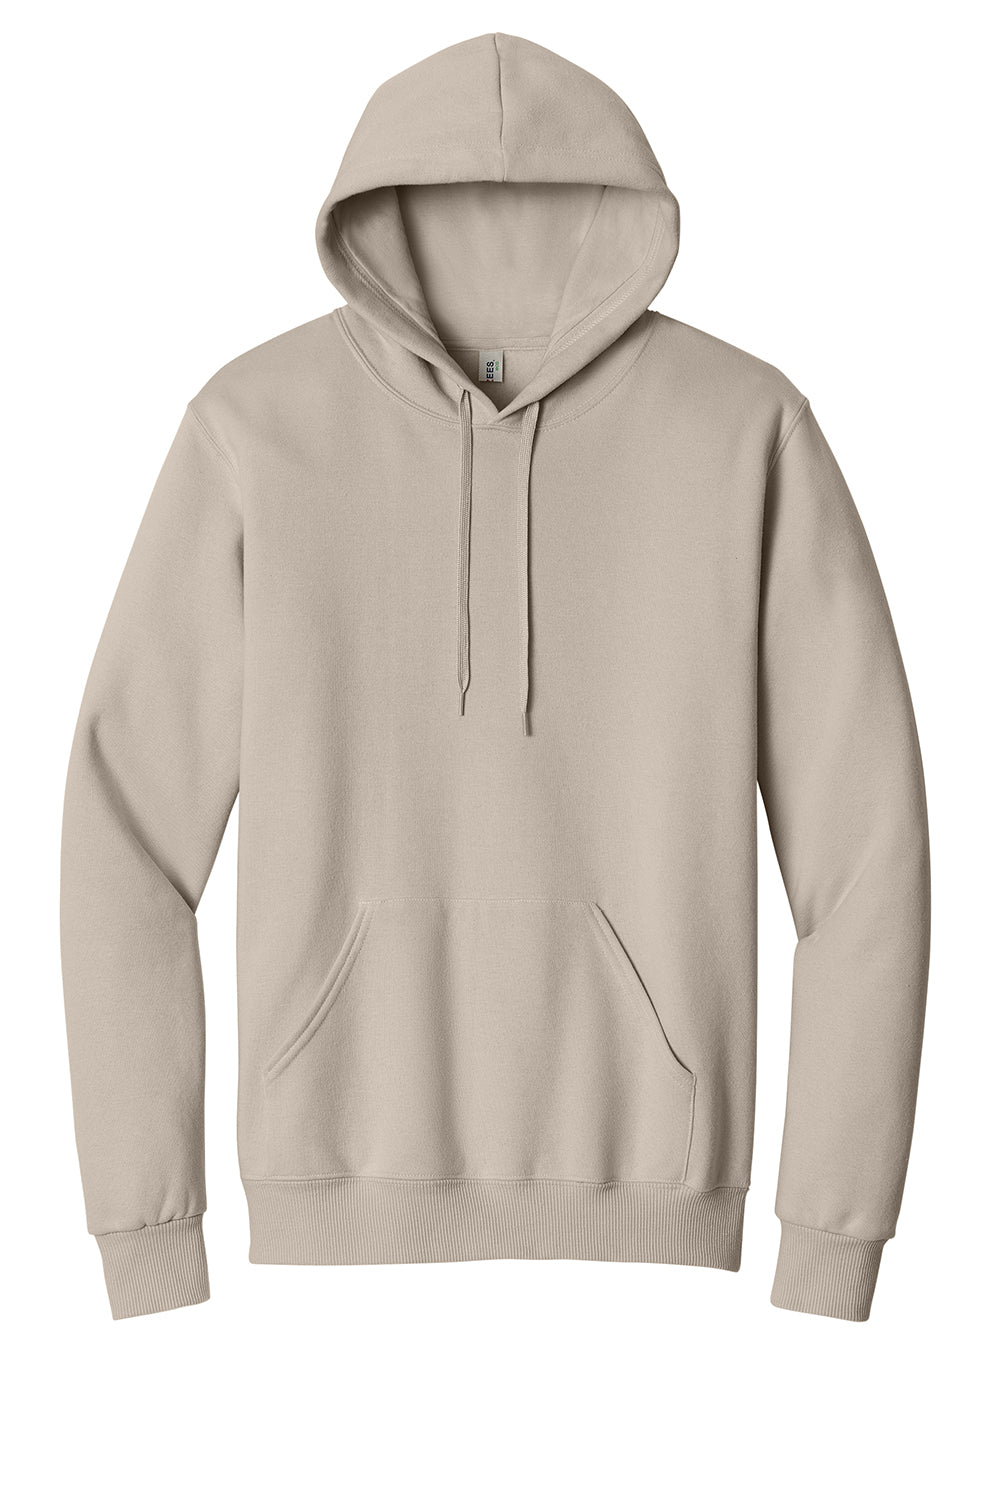 Jerzees 700M Mens Eco Premium Hooded Sweatshirt Hoodie Putty Flat Front